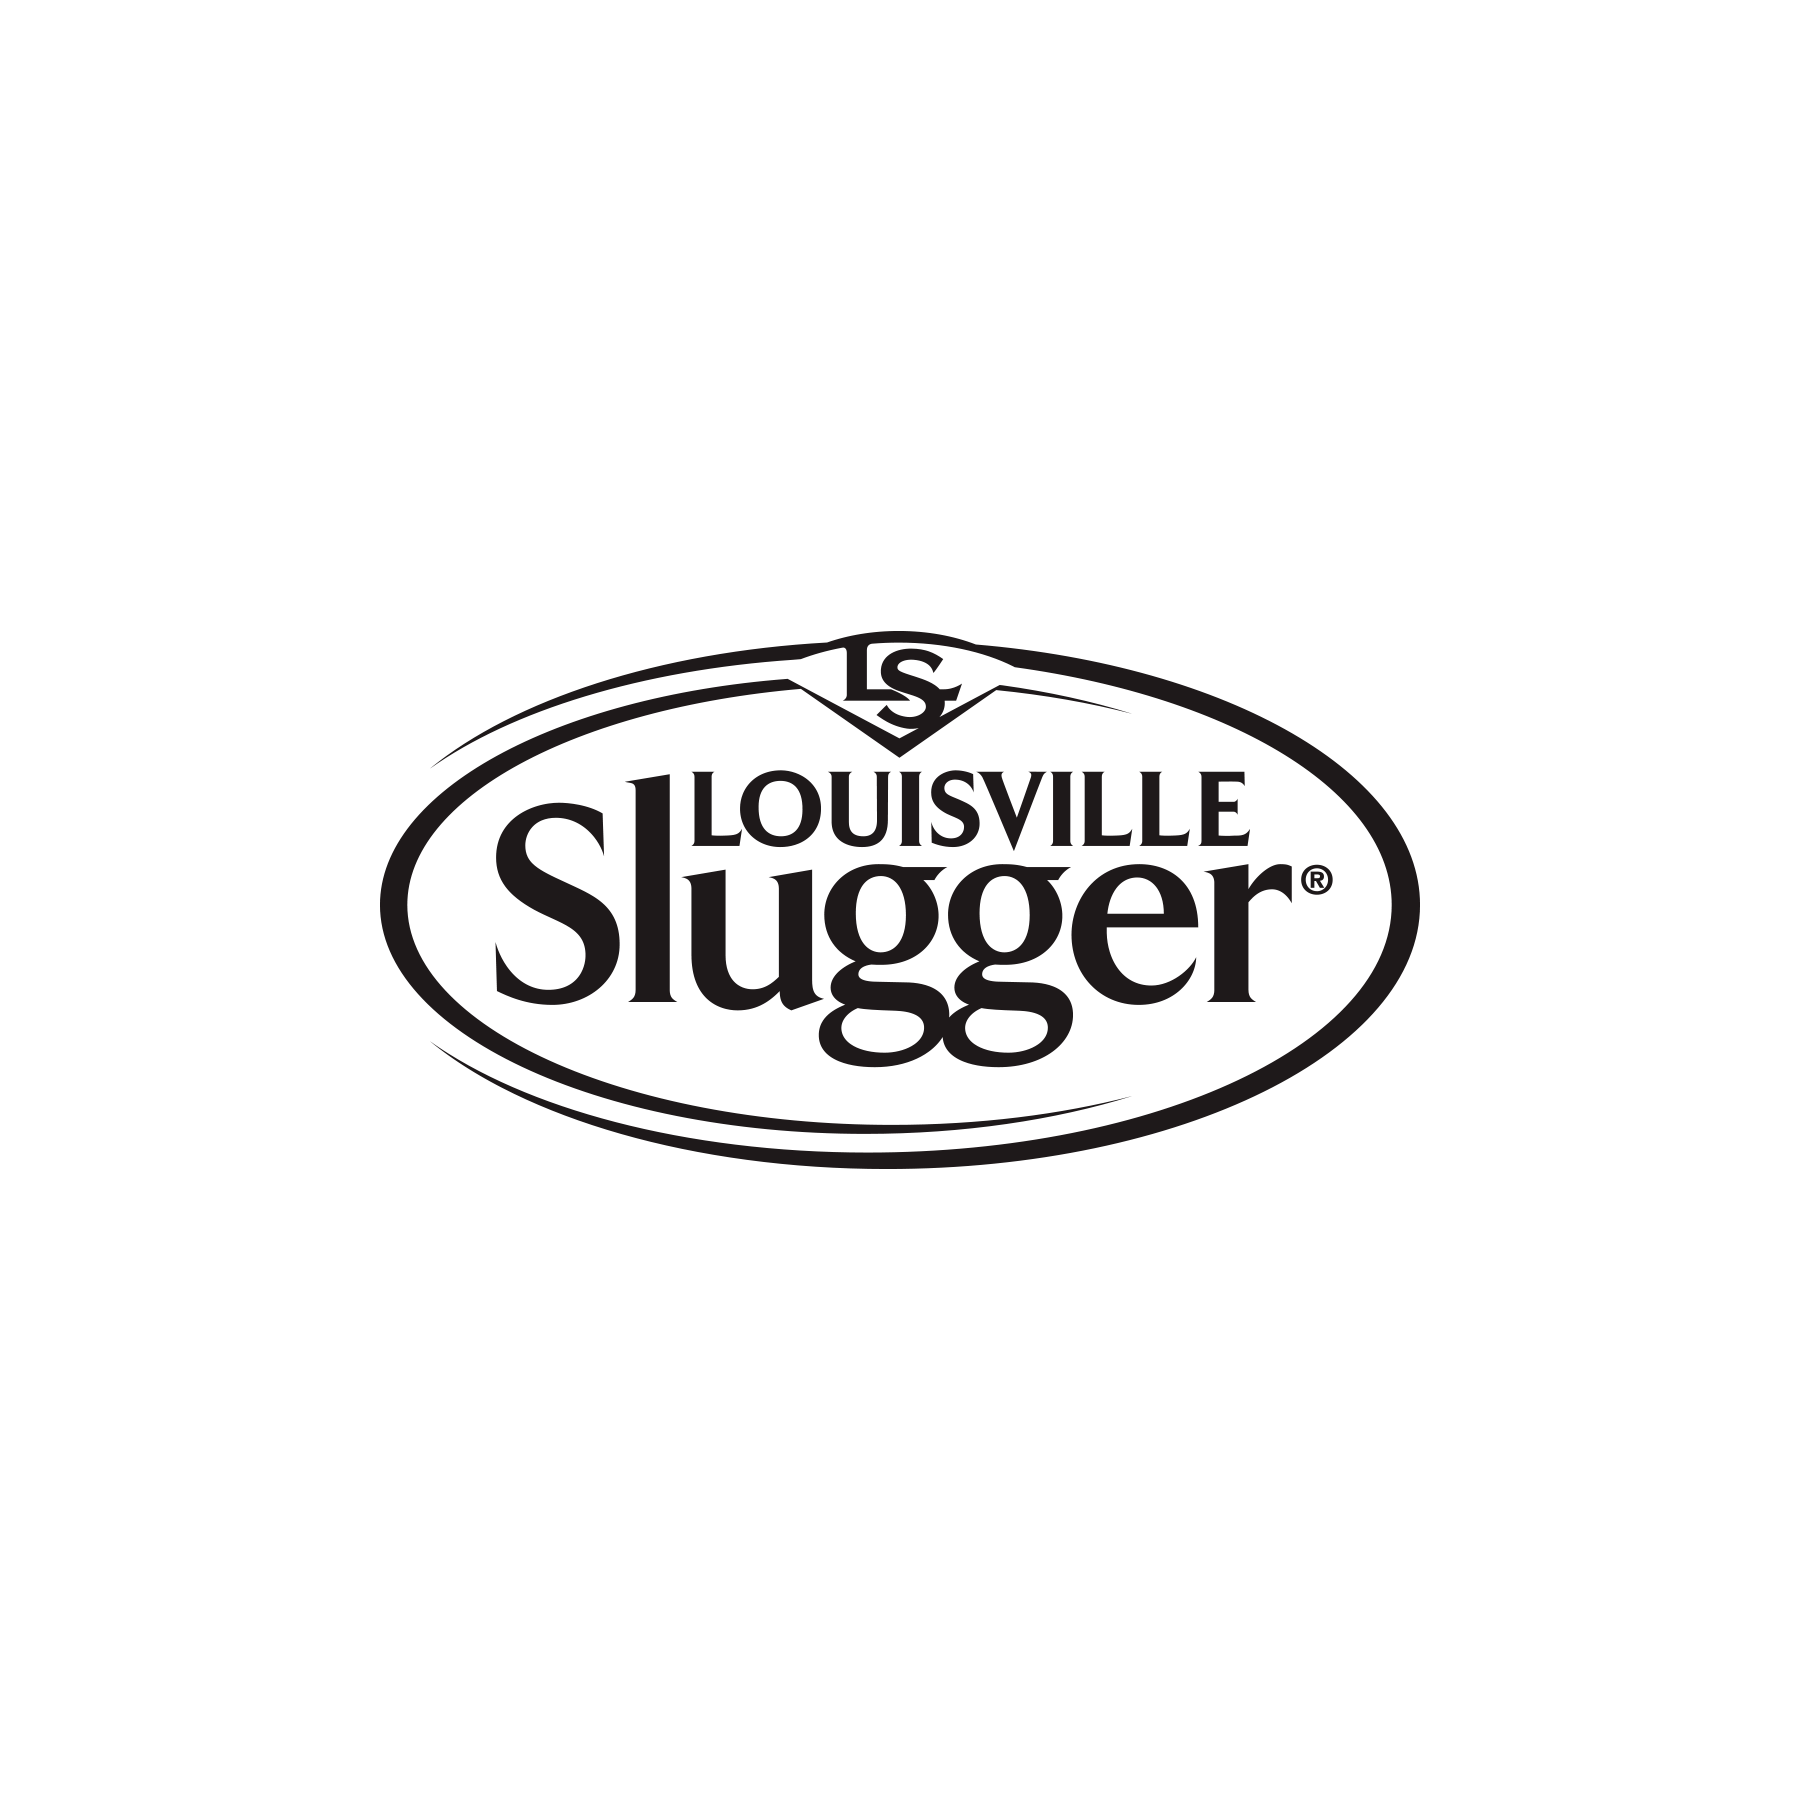 Louisville Slugger Logo - Louisville Slugger Slugger & Laramore